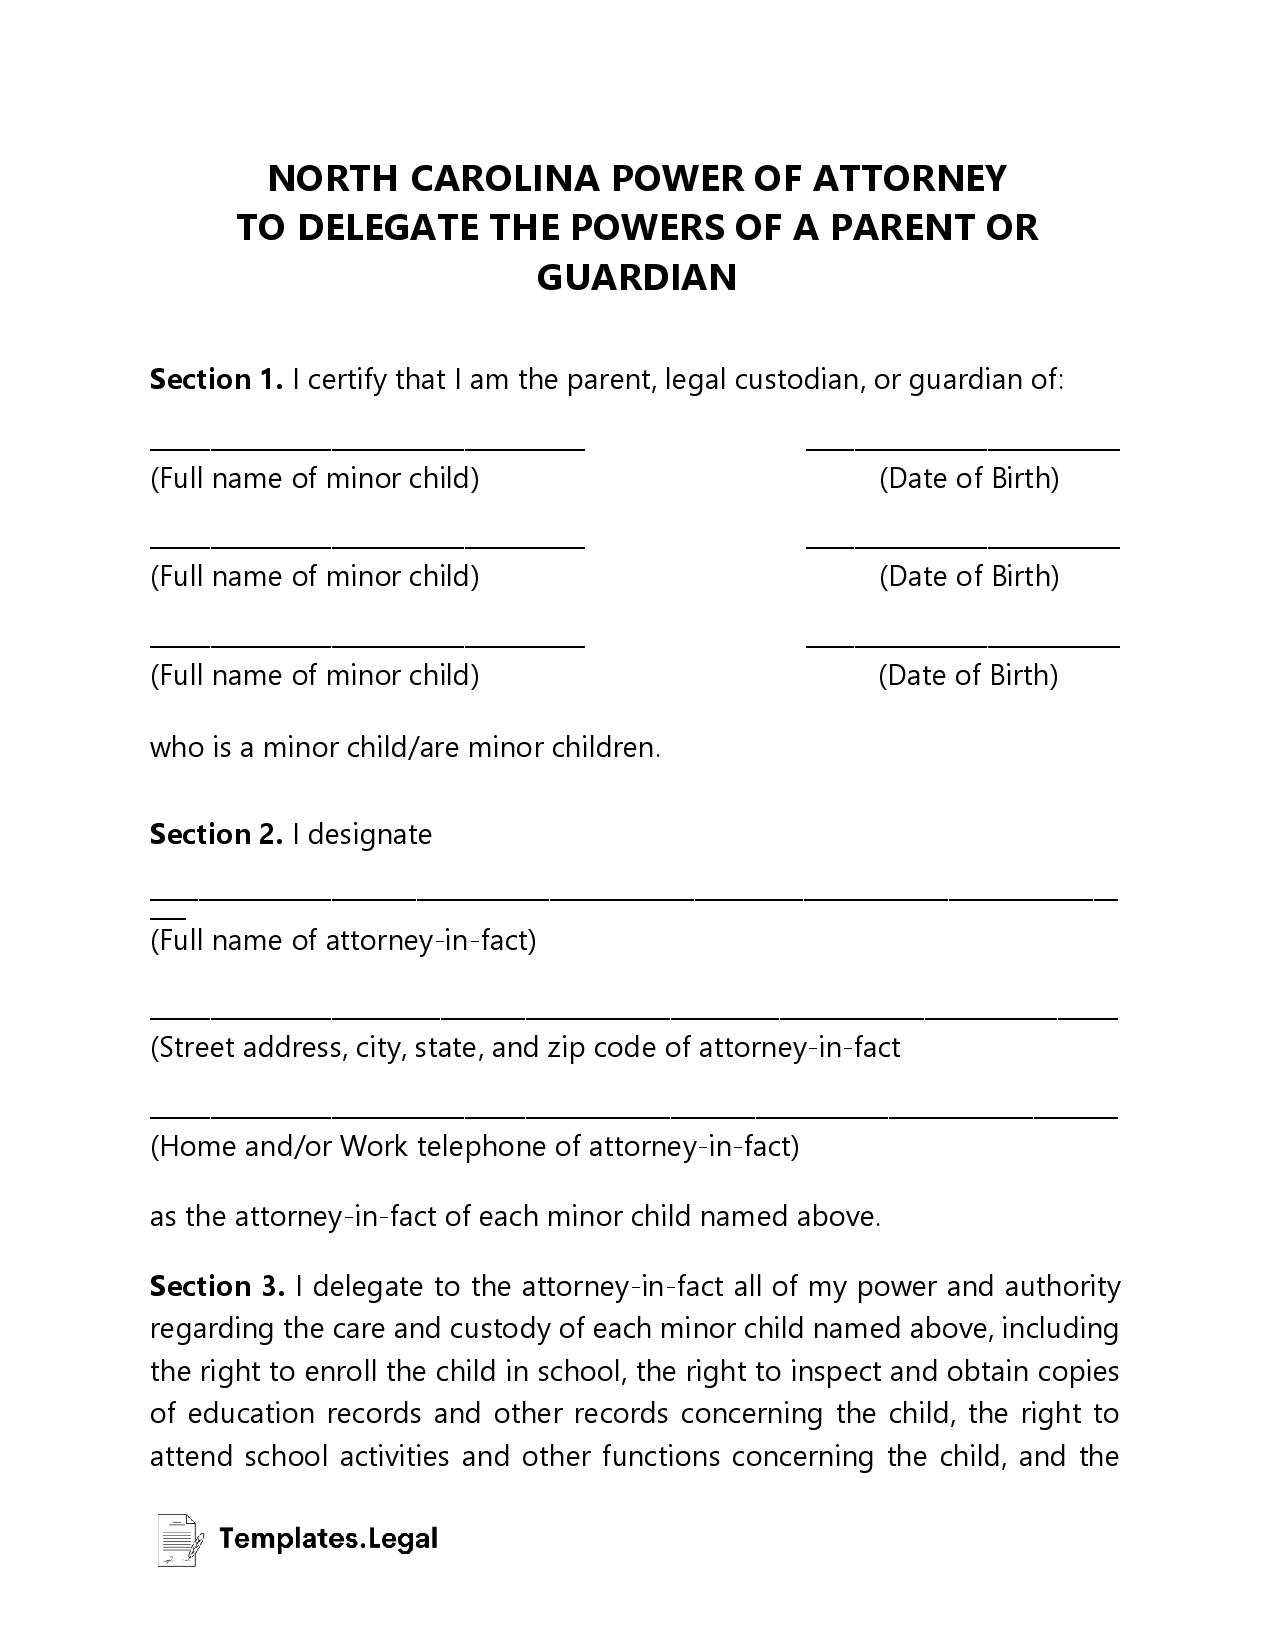 North Carolina Minor (Child) Power of Attorney - Templates.Legal